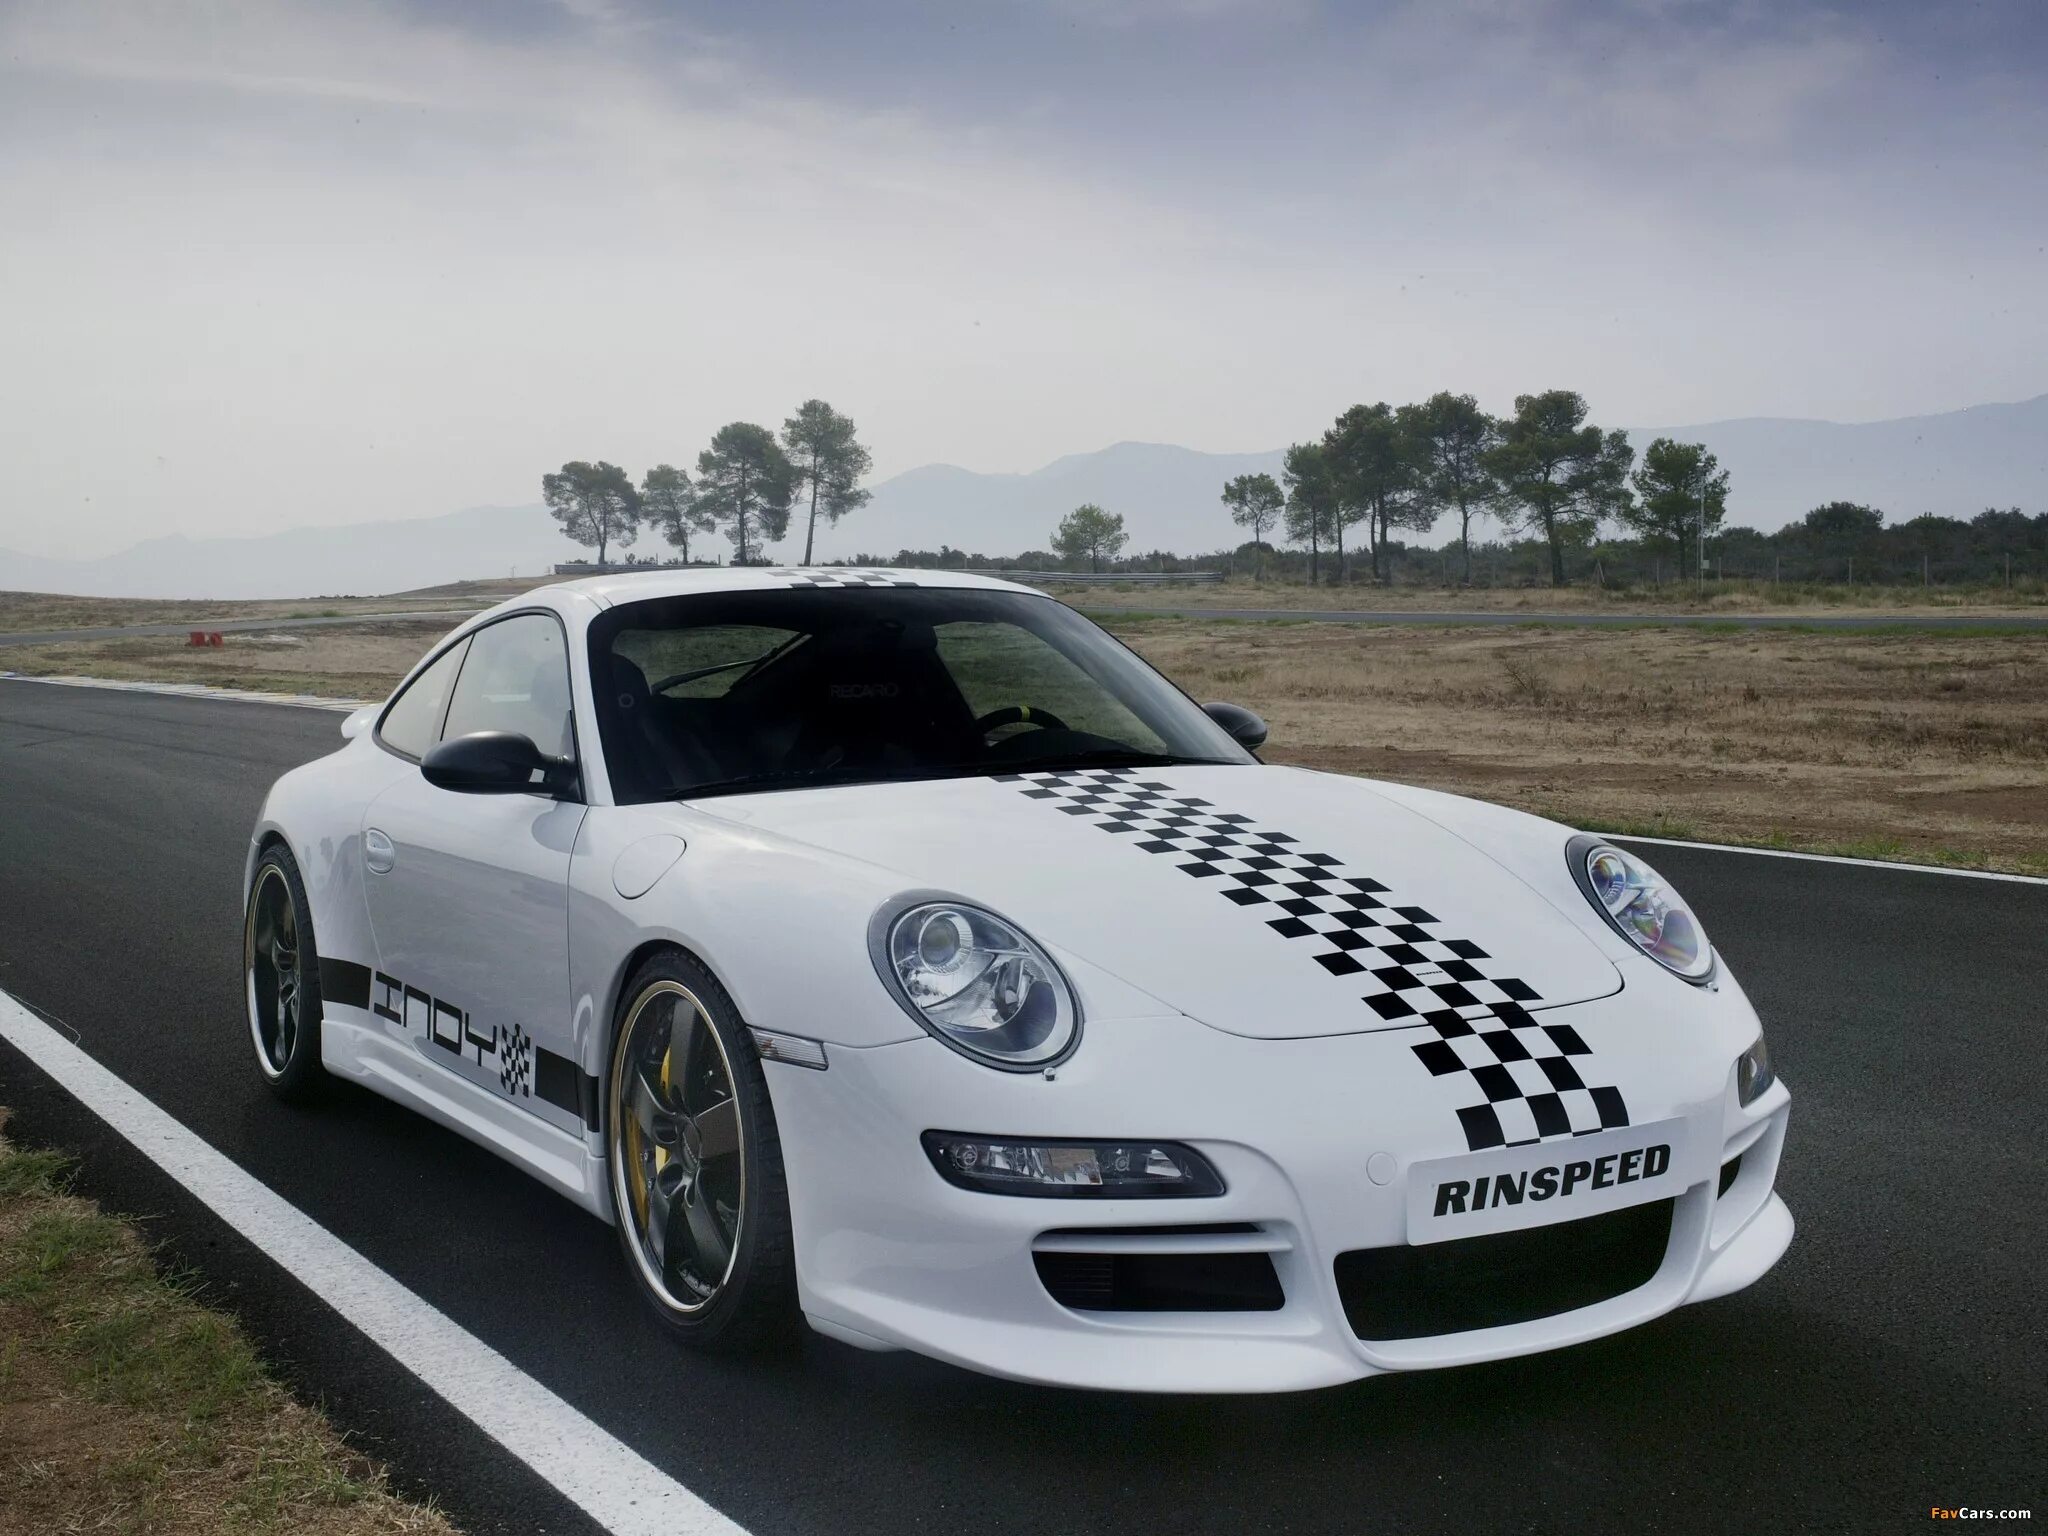 Porsche 911 Rinspeed. Rinspeed Porsche 997 Indy. Porsche 911 Mansory. Mansory Porsche 997. Насчет машины